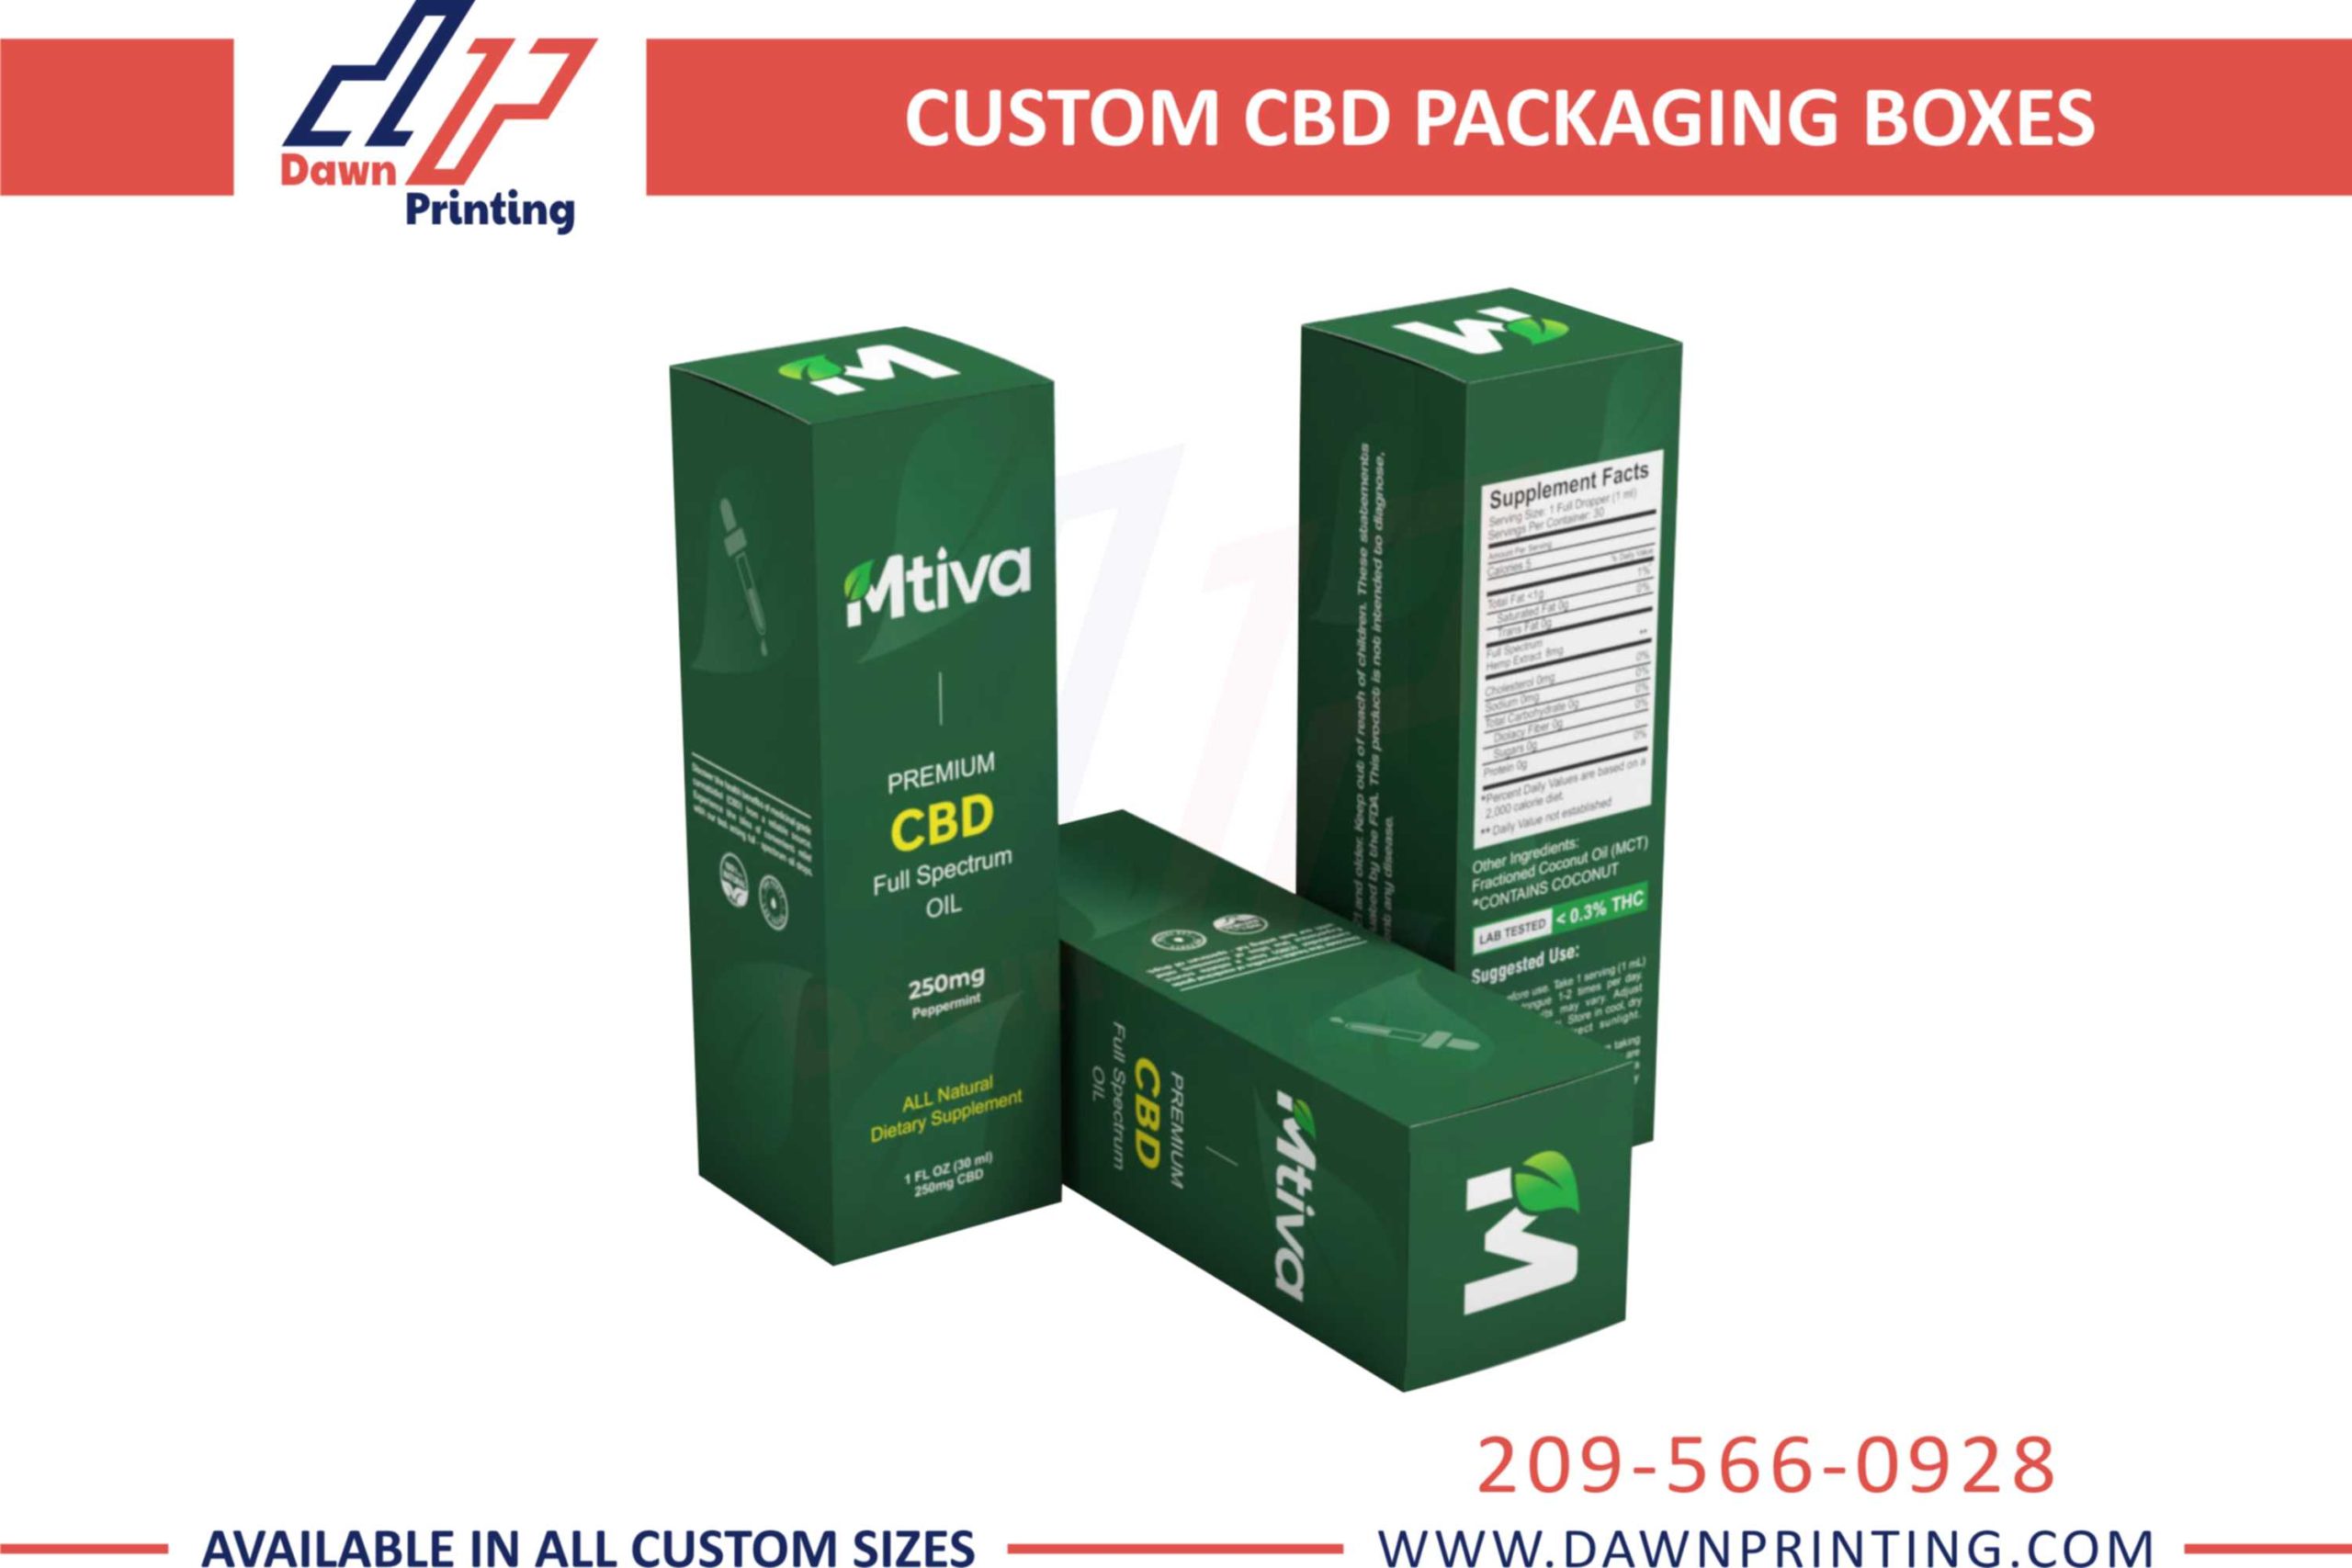 Dawn Printing Presents Custom CBD Packaging for you